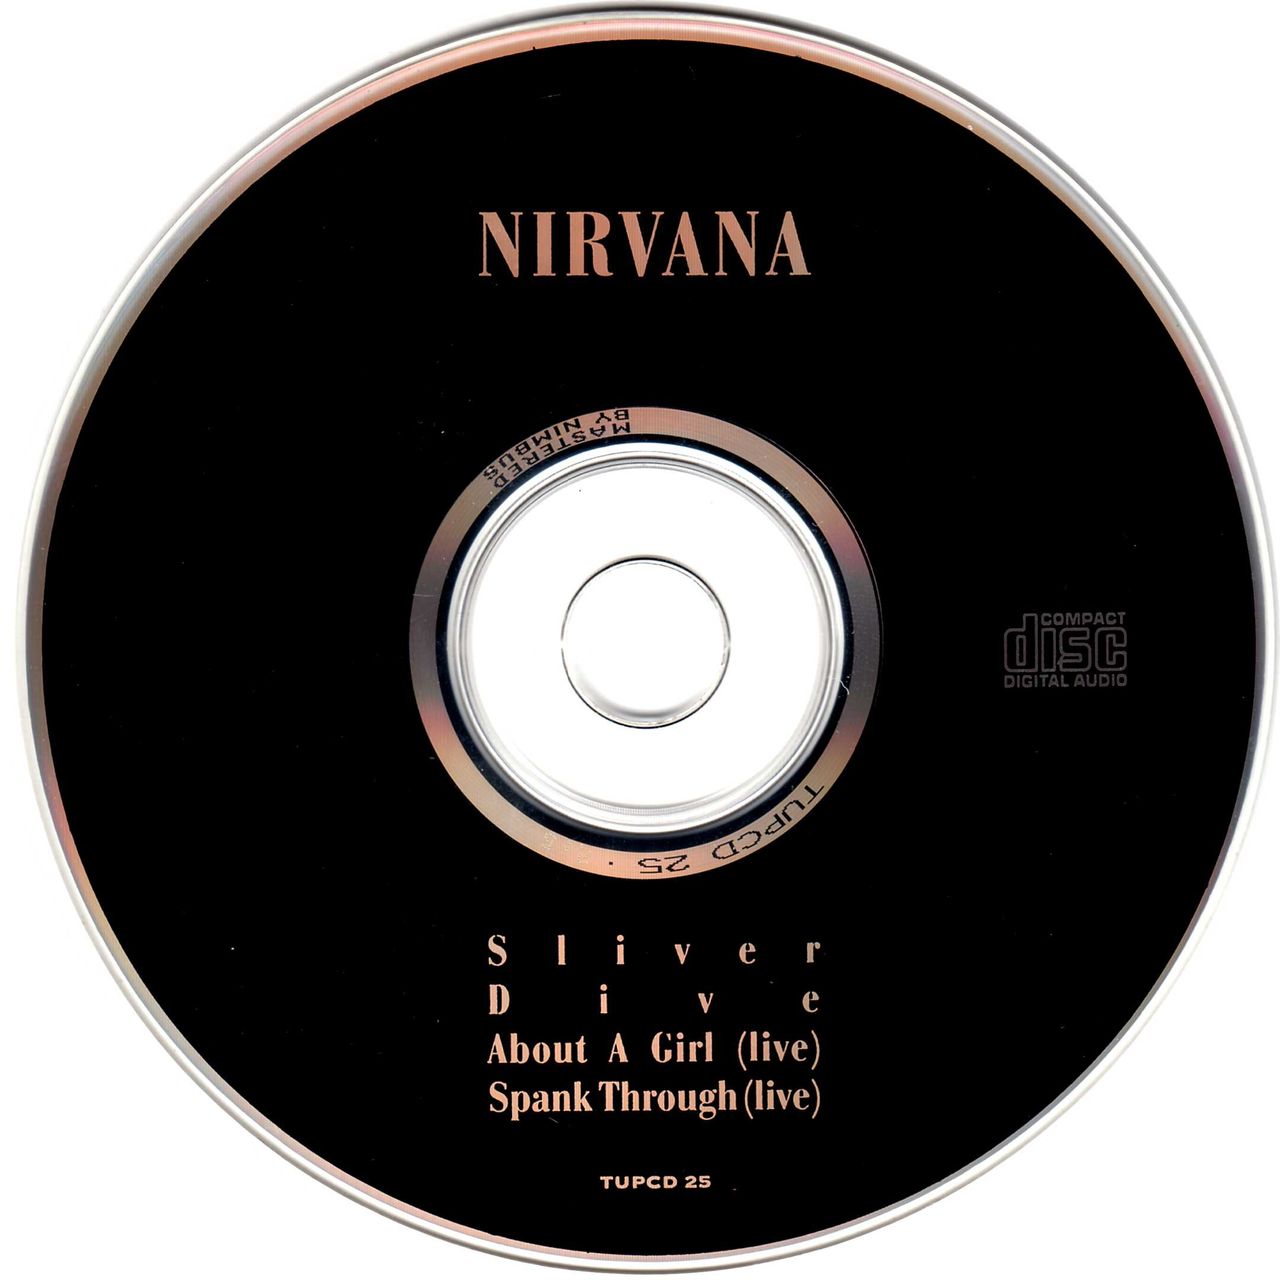 Nirvana (US) Sliver UK CD single